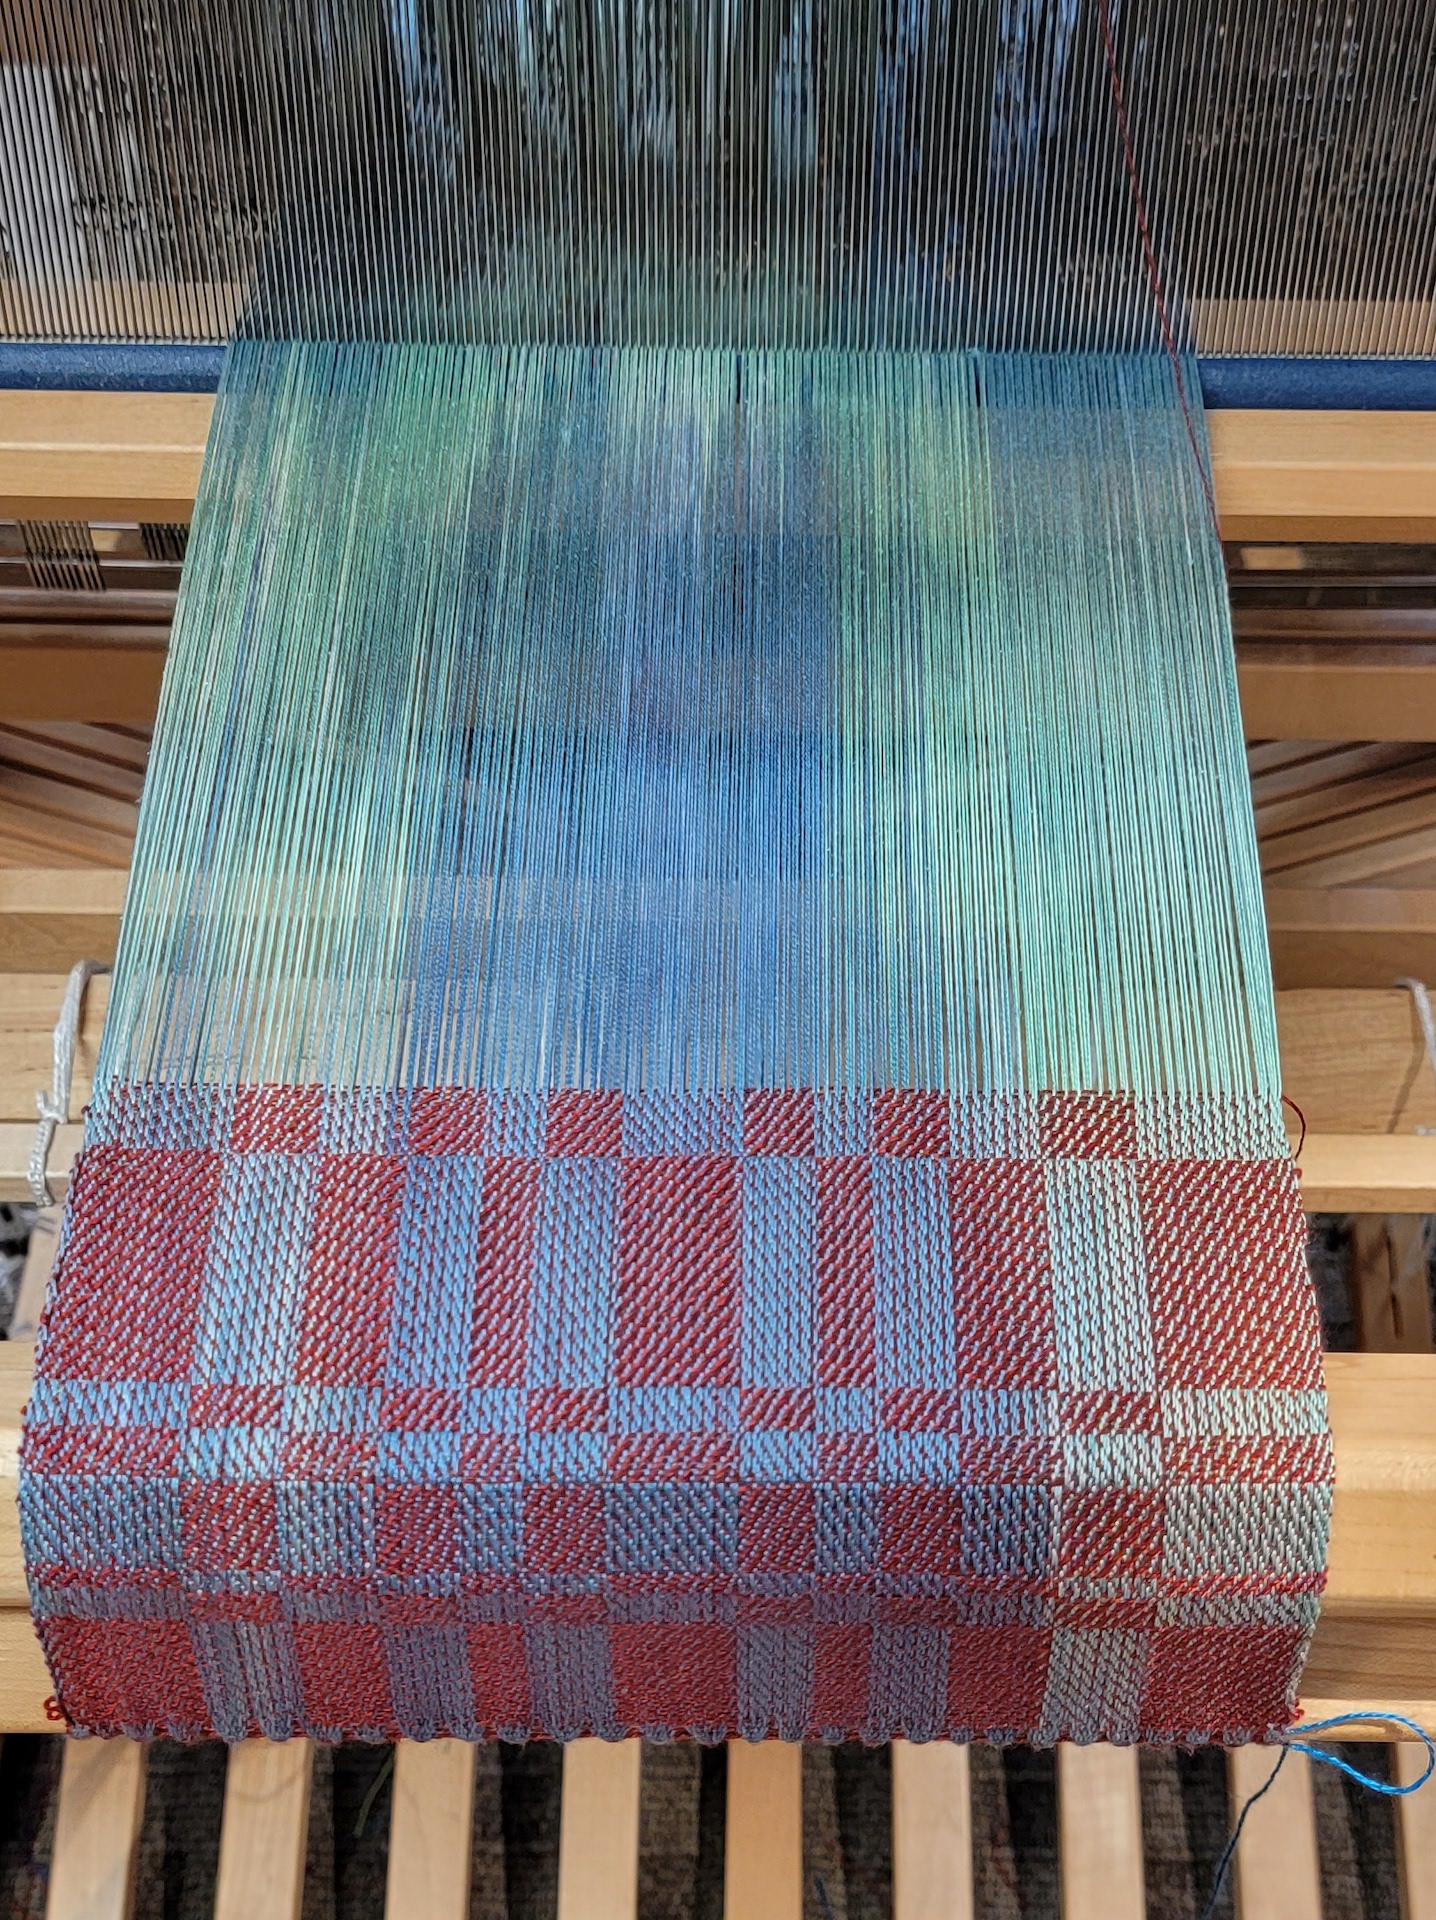 Weaving Painted Silk Scarves - Red Stone Glen